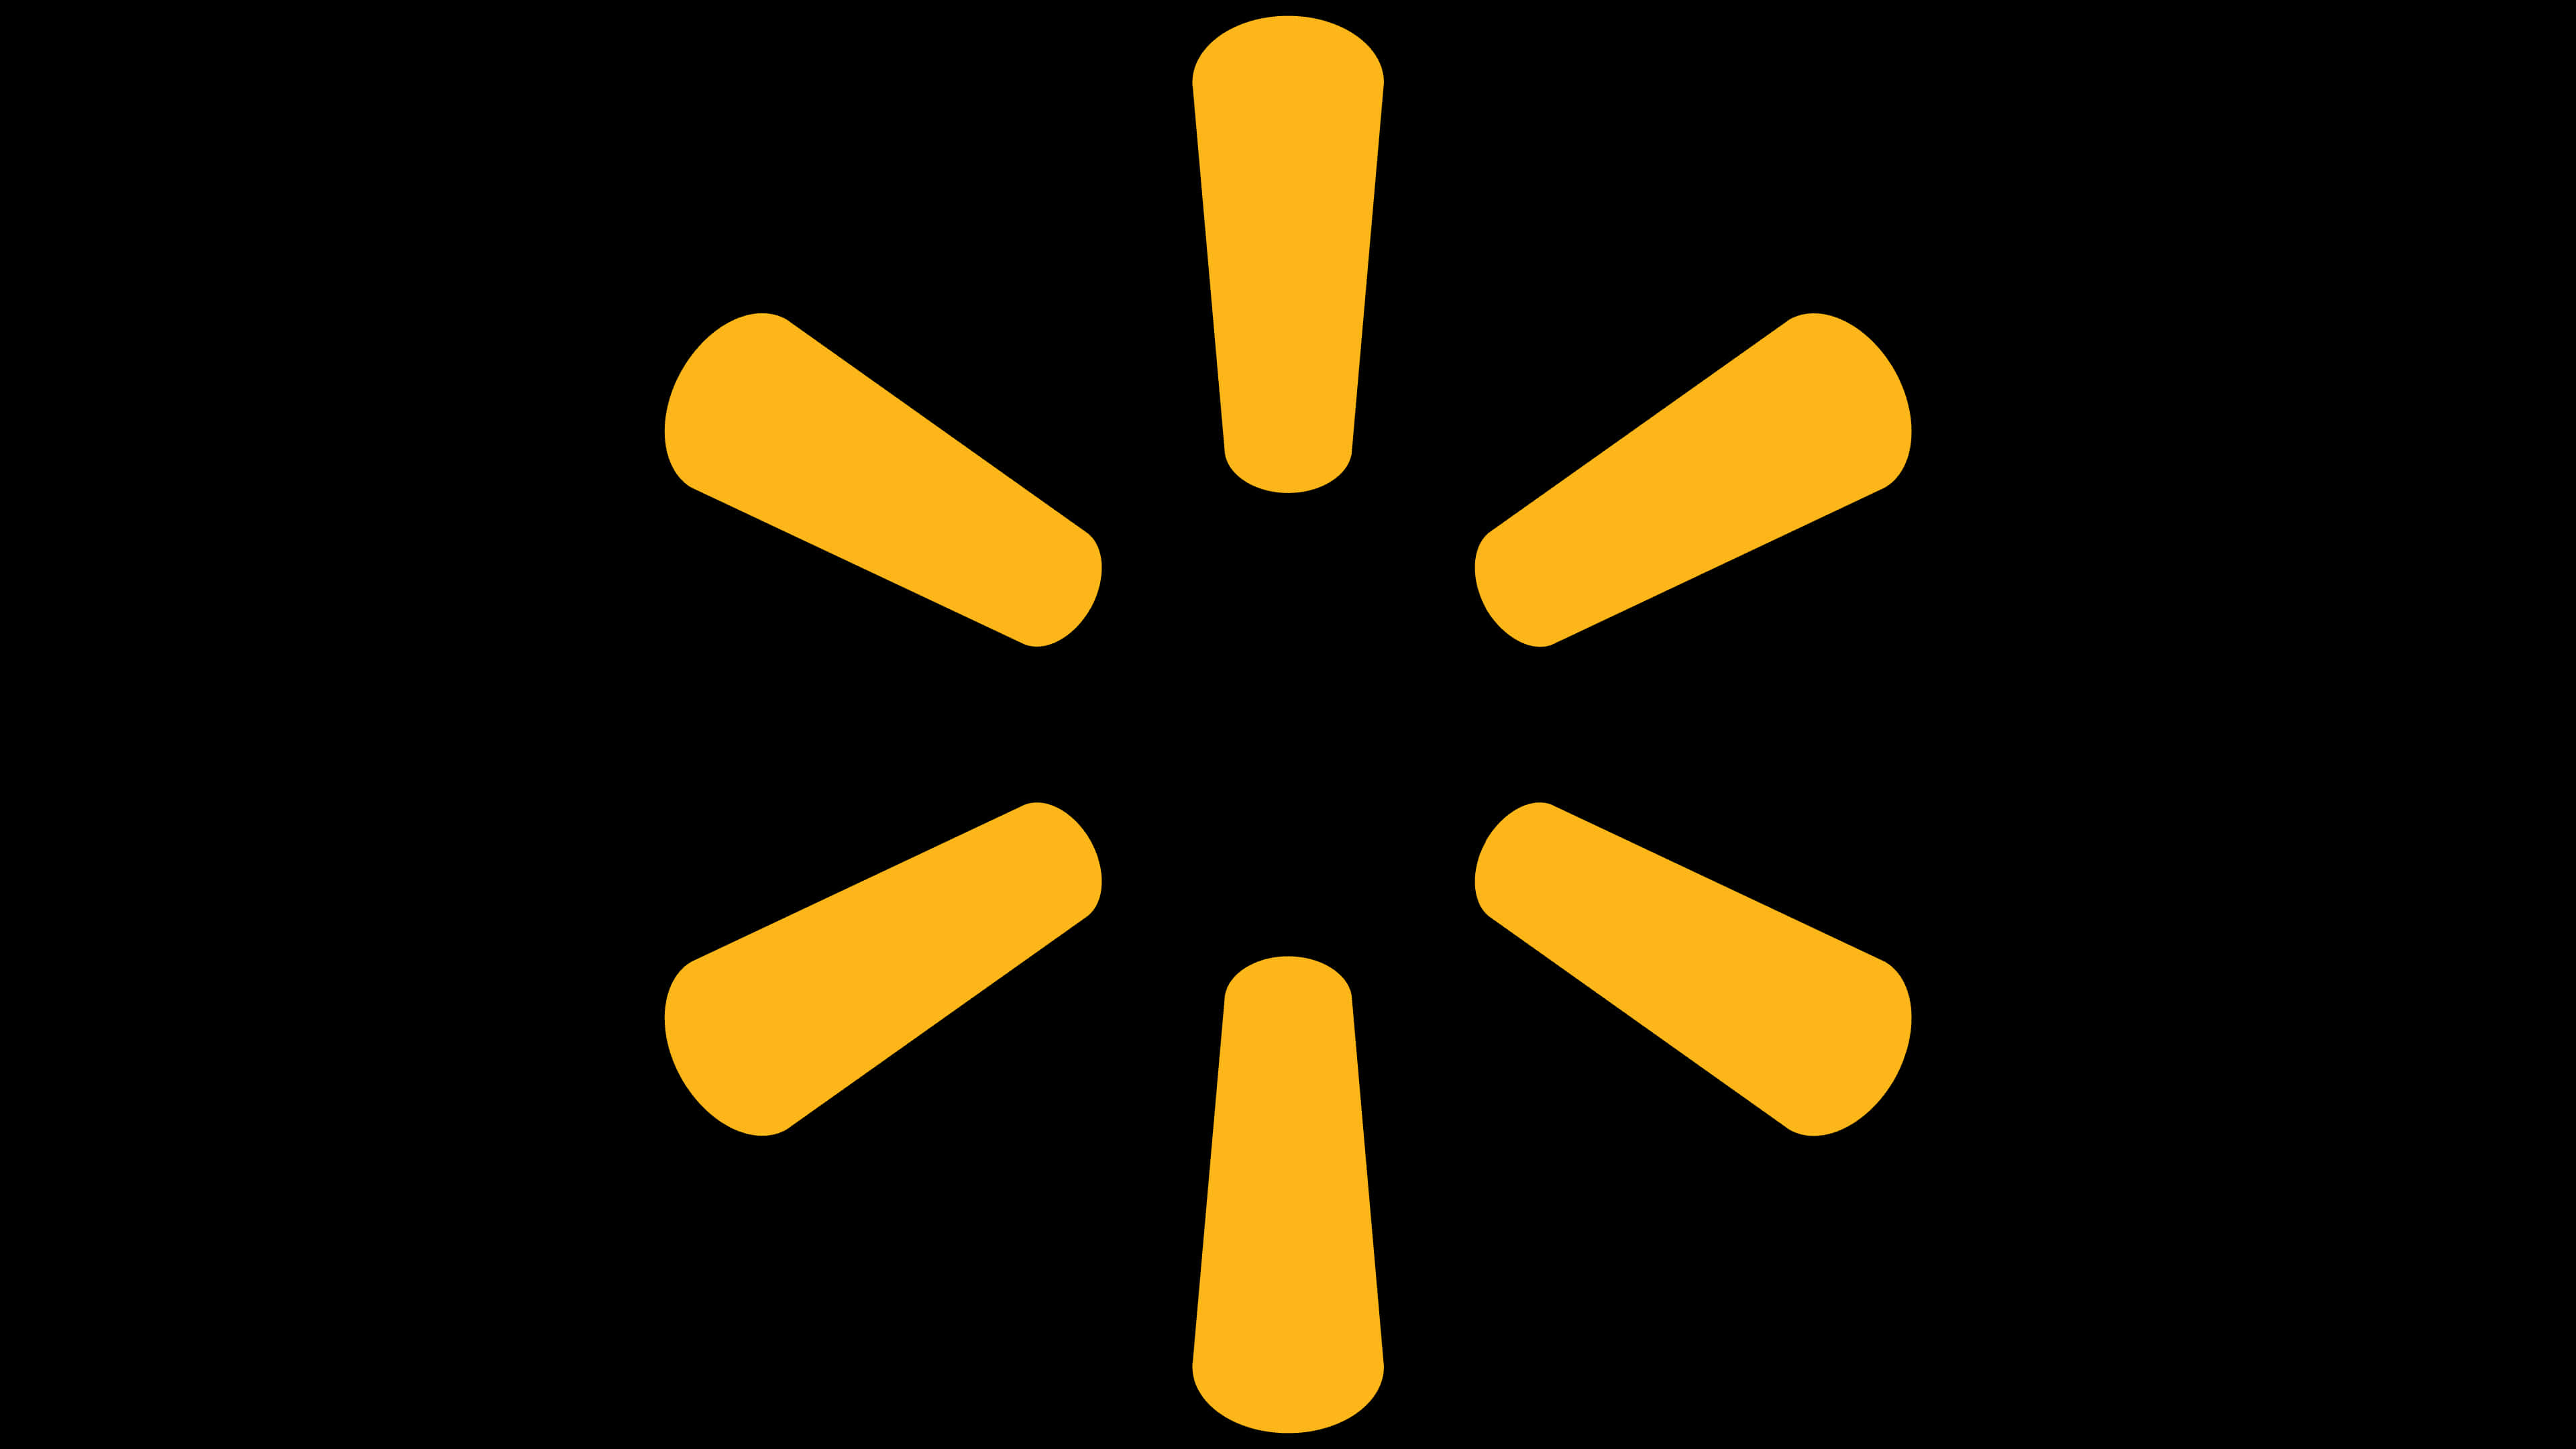 A Yellow Circular Logo On A Black Background